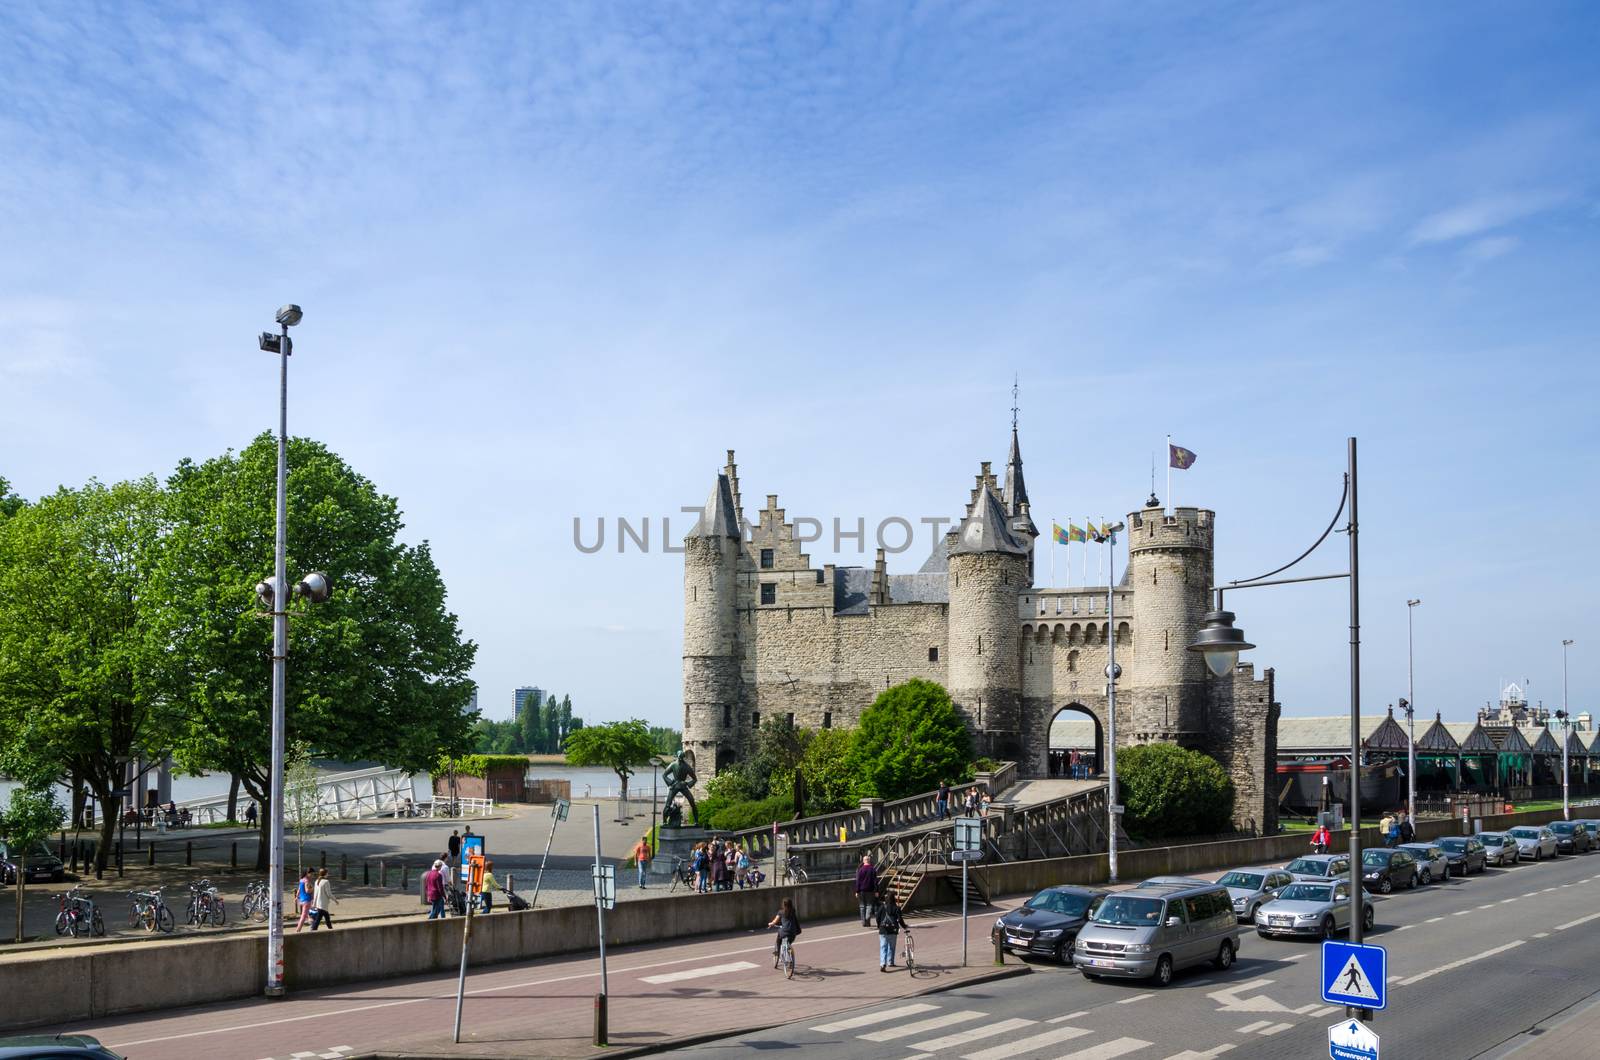 Antwerp, Belgium - May 11, 2015: People visit Steen Castle (Het steen) on May 11, 2015. Het Steen is a medieval fortress in the old city centre of Antwerp, Belgium.